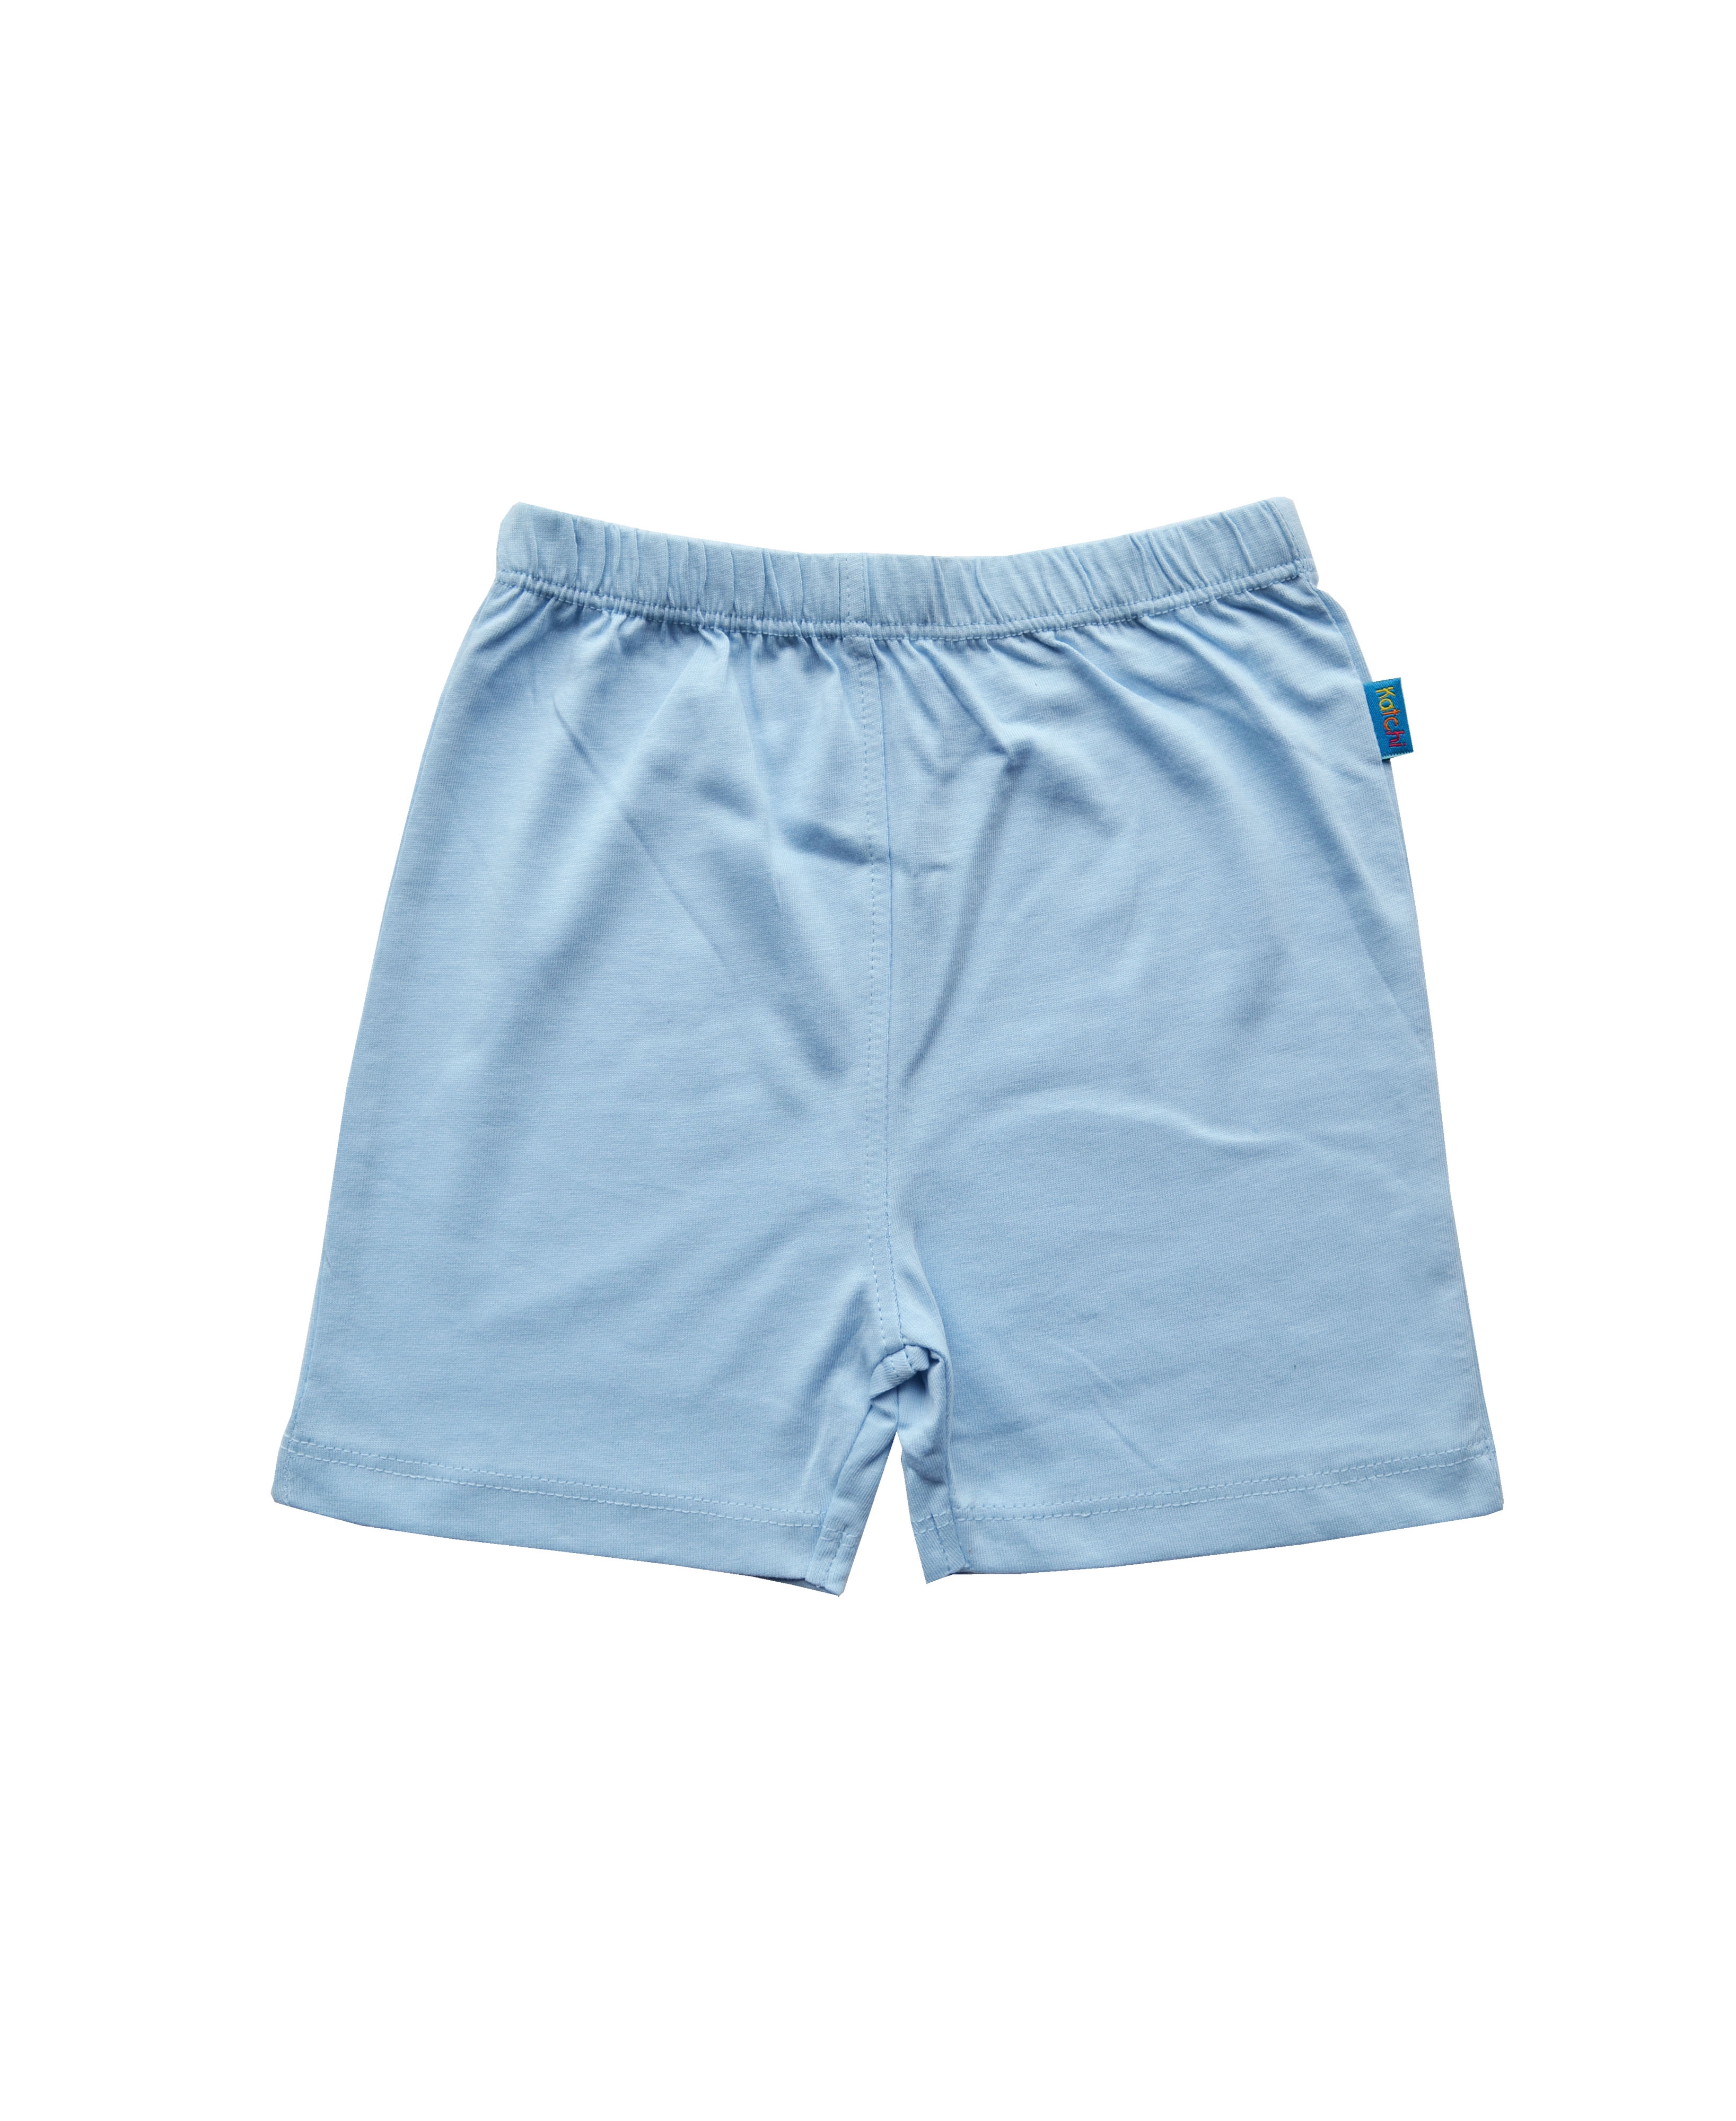 Blue Boys Shorts (100% Cotton Single Jersey)